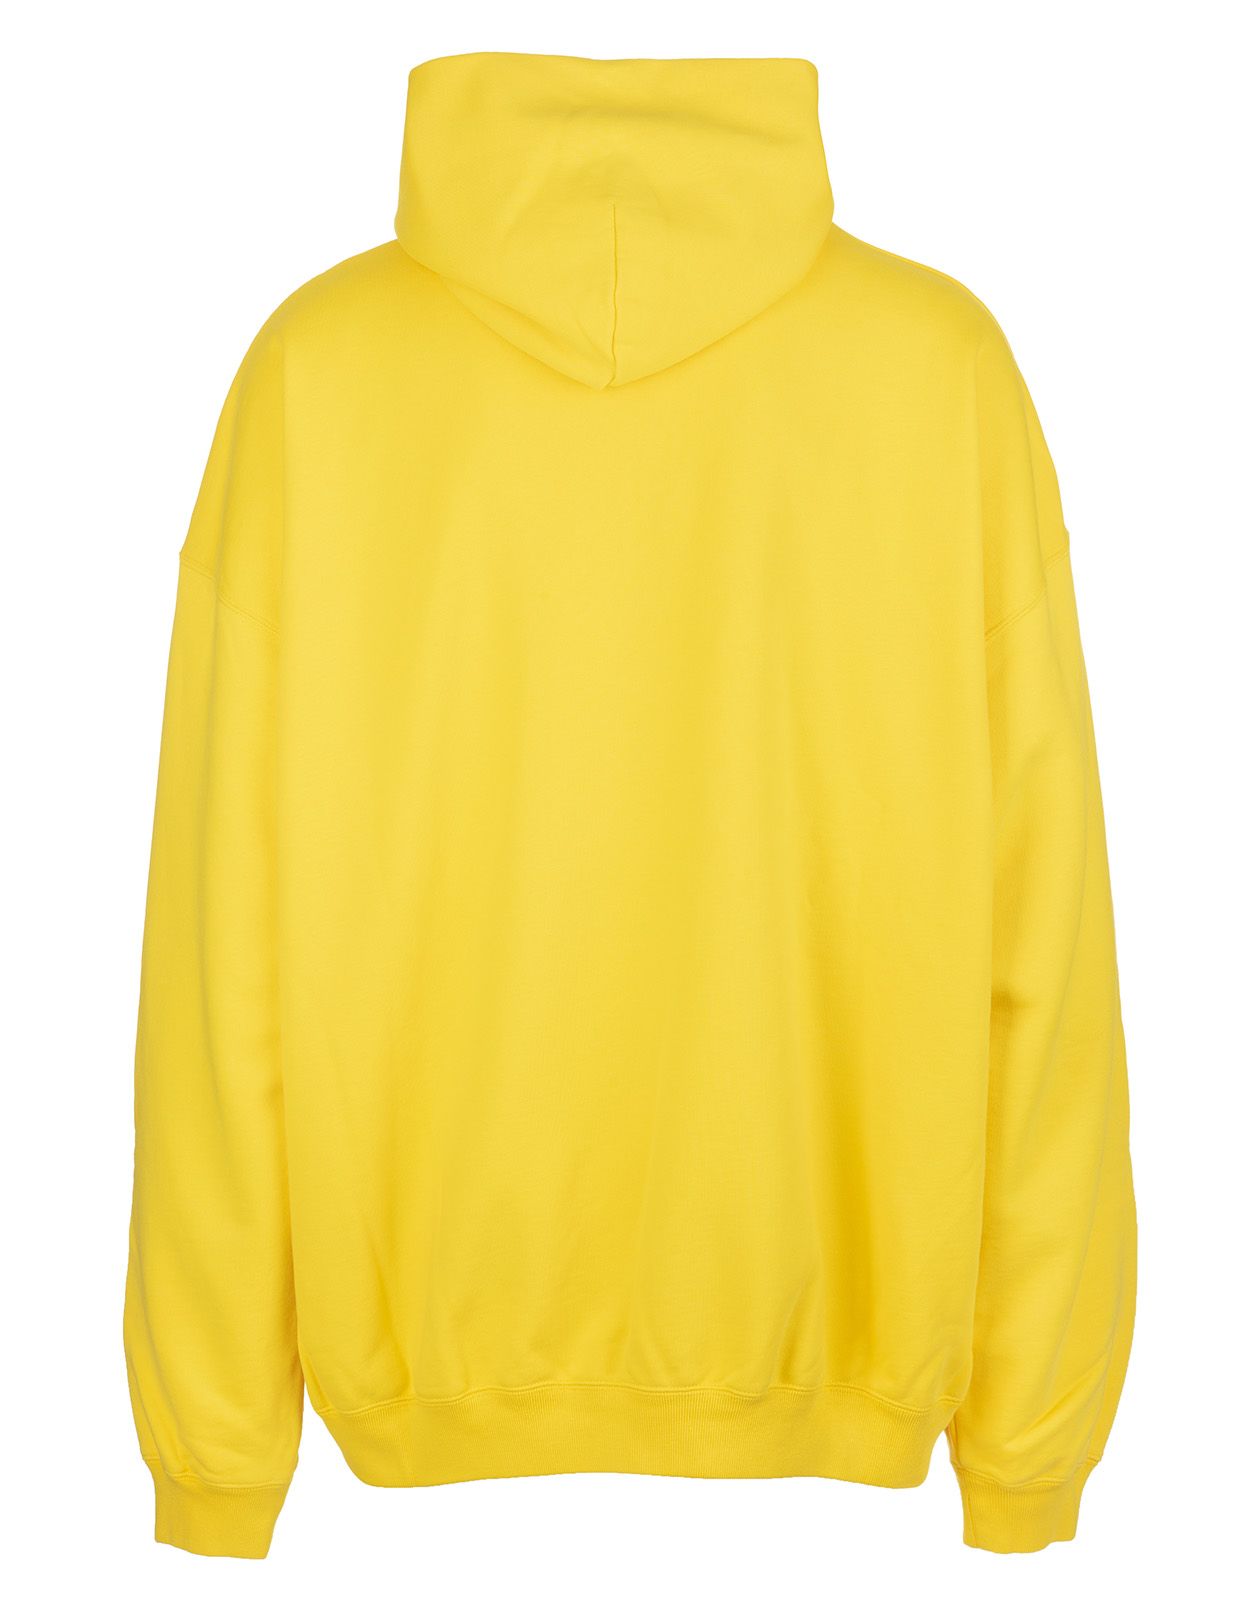 balenciaga sweater yellow